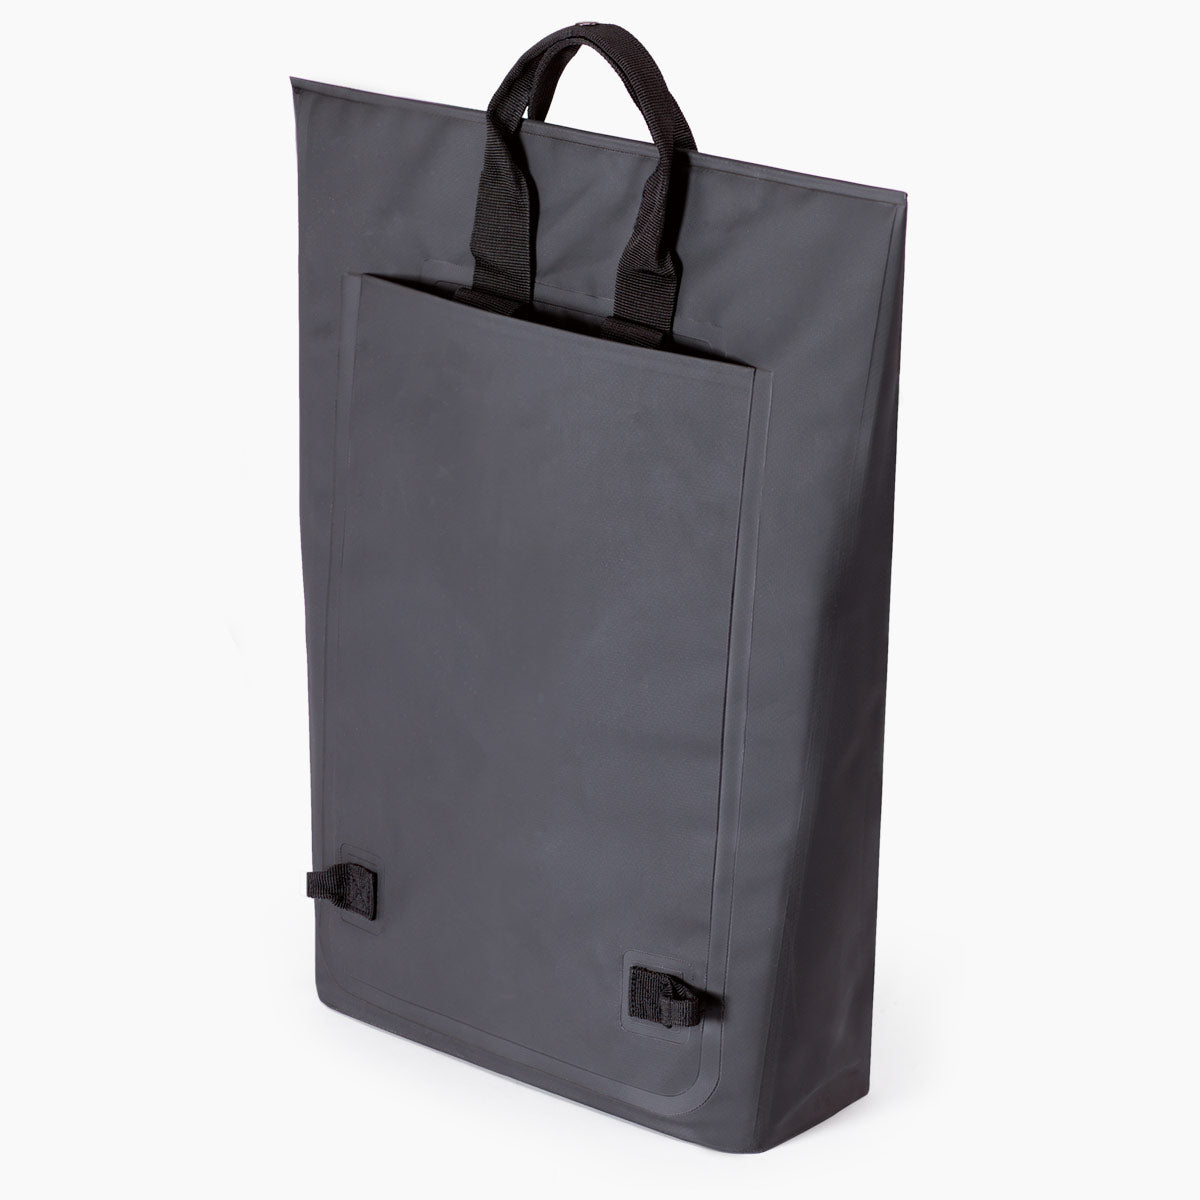 Model C • Tote Bag/ Backpack • Medium • Black